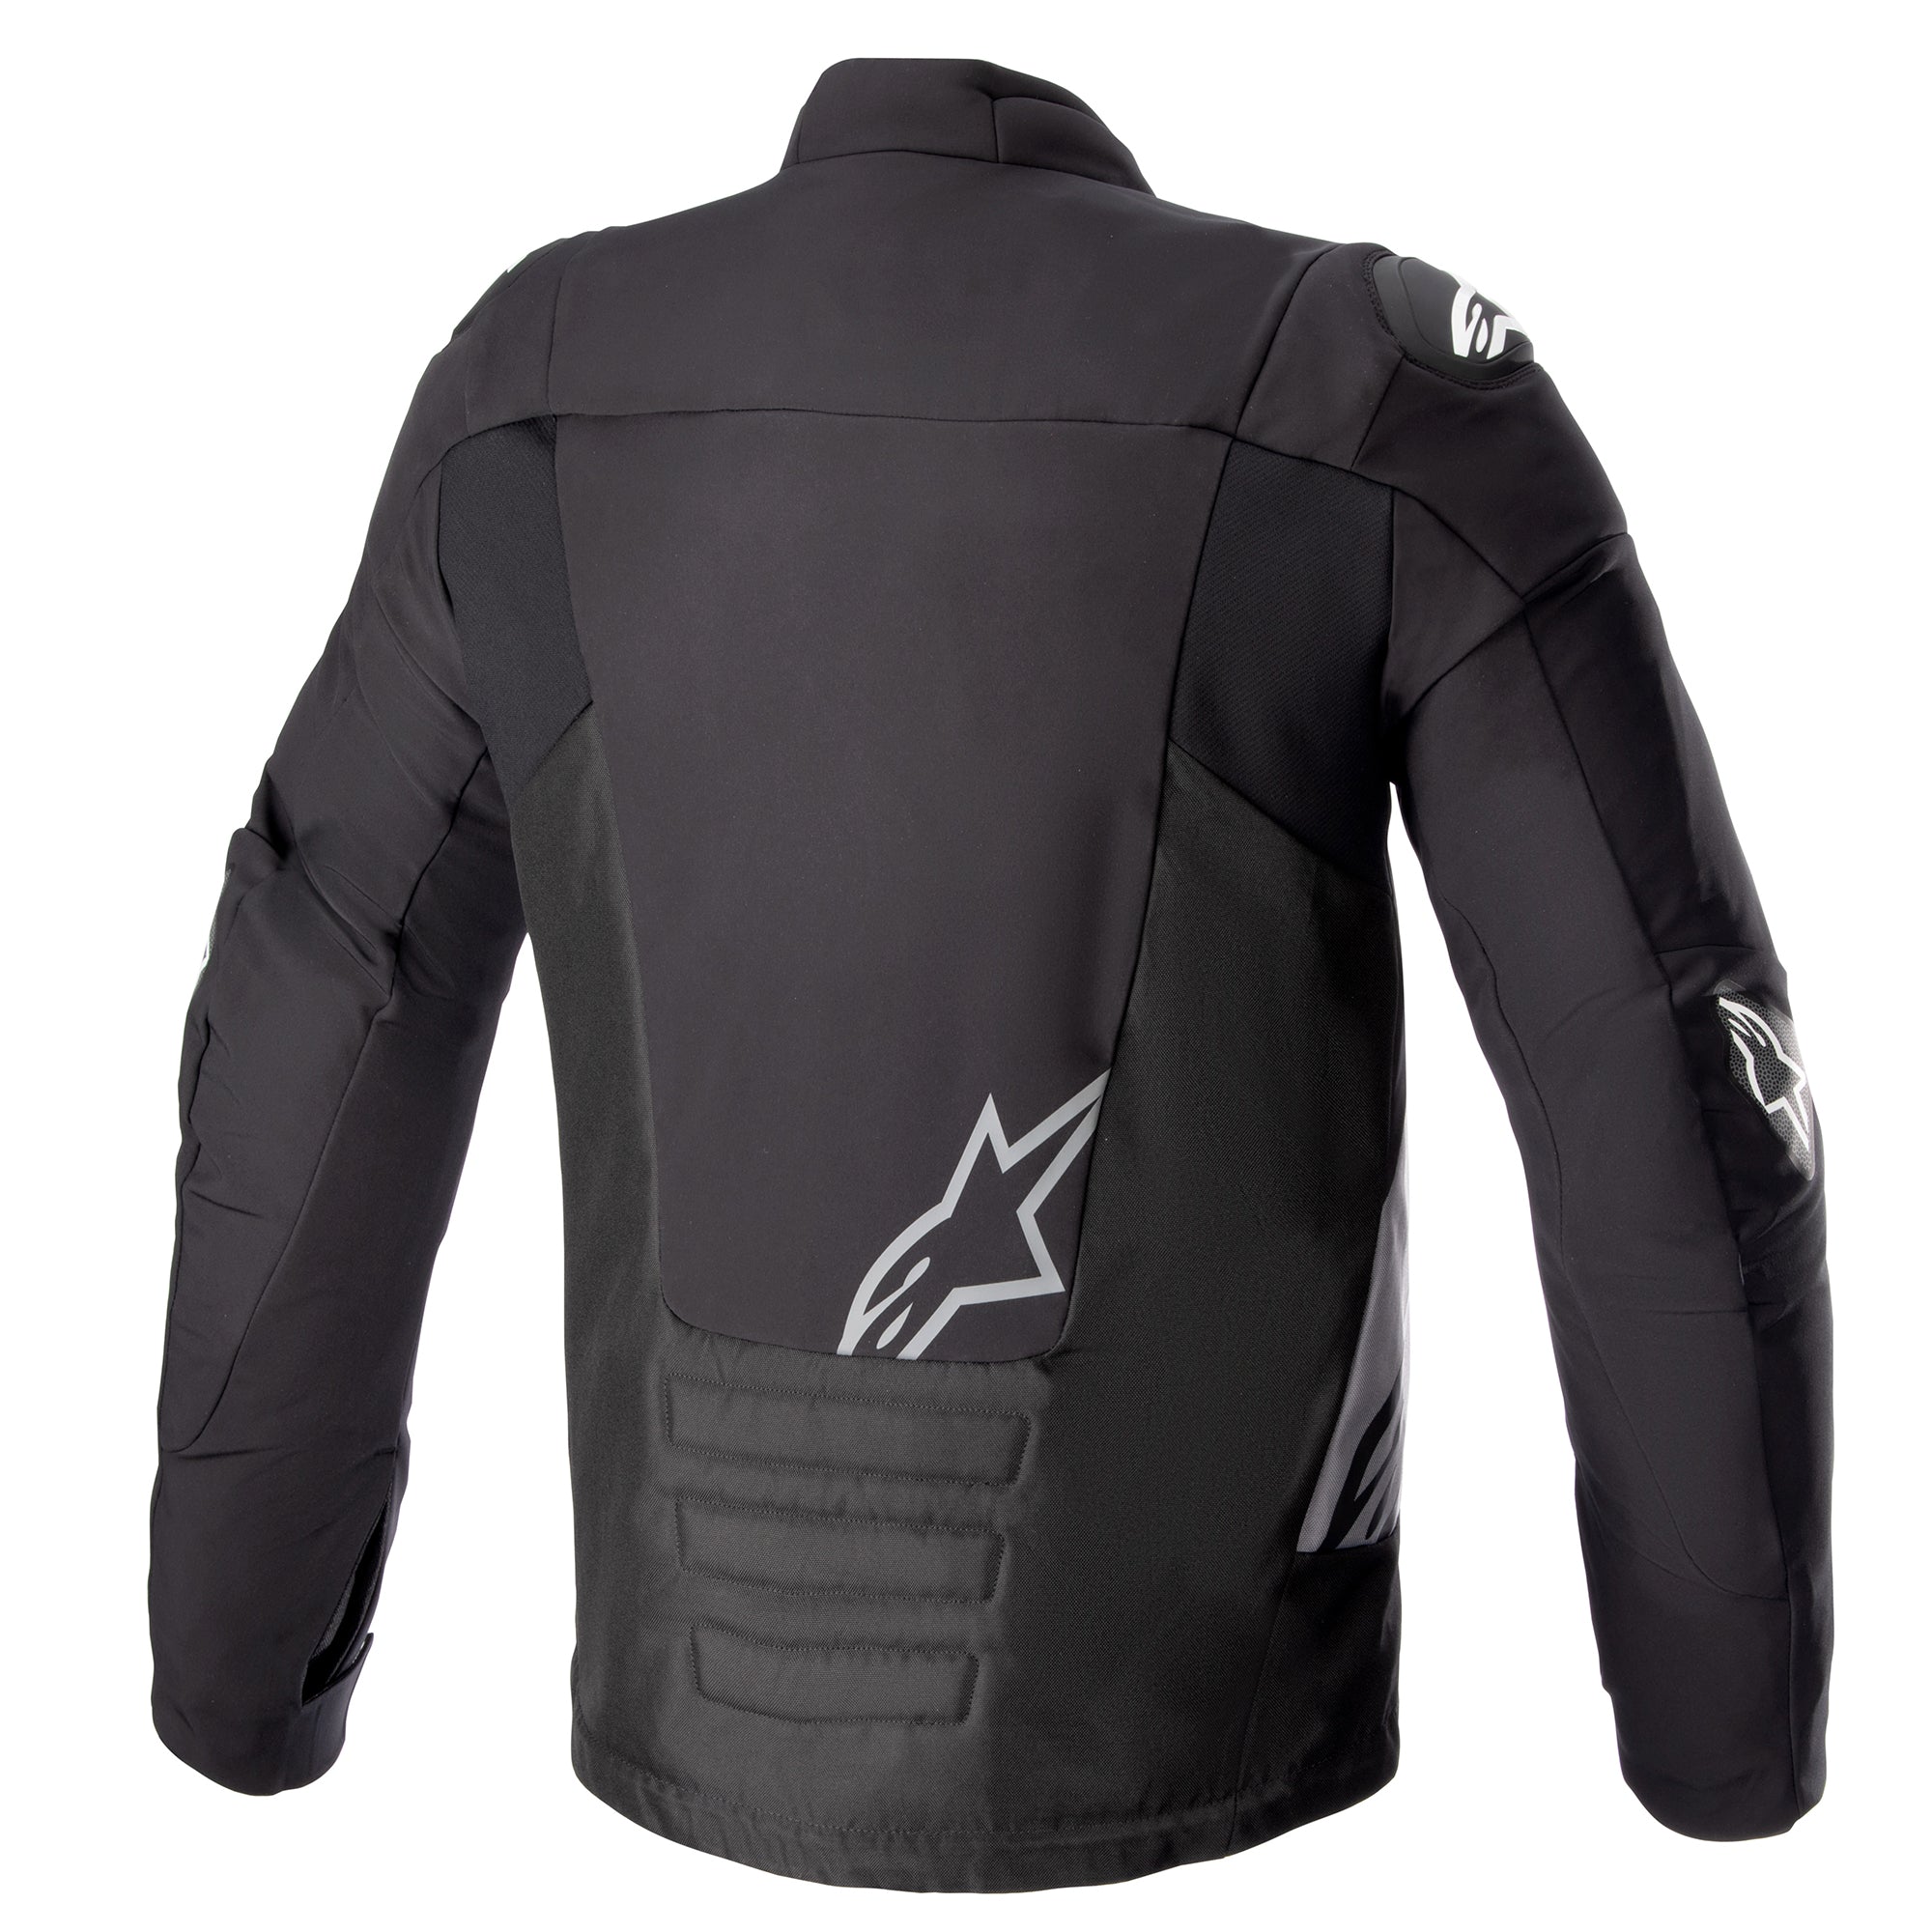 SMX Waterproof Jacket